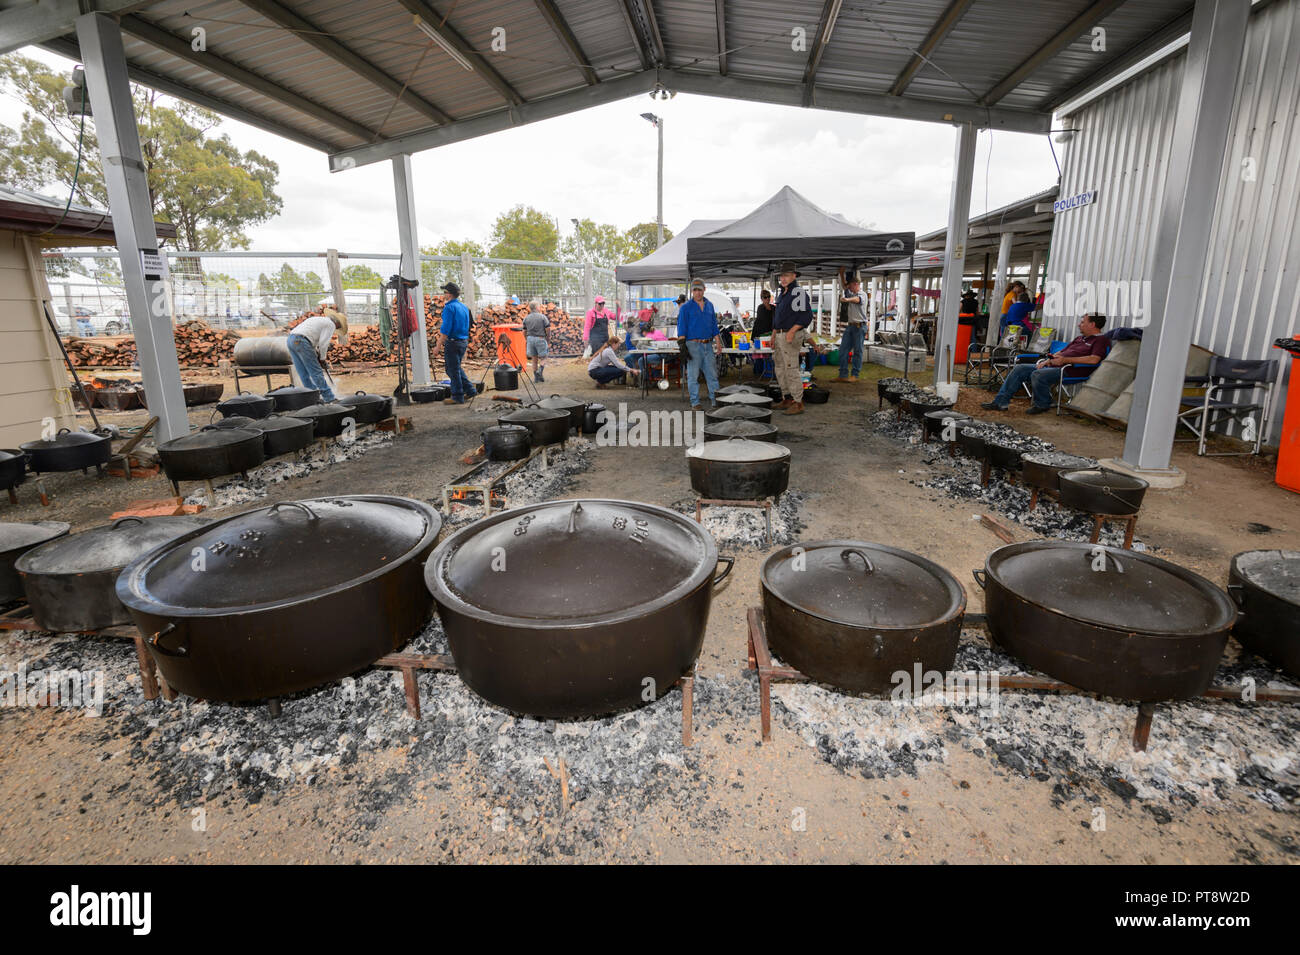 https://c8.alamy.com/comp/PT8W2D/cast-iron-cooking-pots-at-the-australian-camp-oven-festival-2018-millmerran-southern-queensland-qld-australia-PT8W2D.jpg